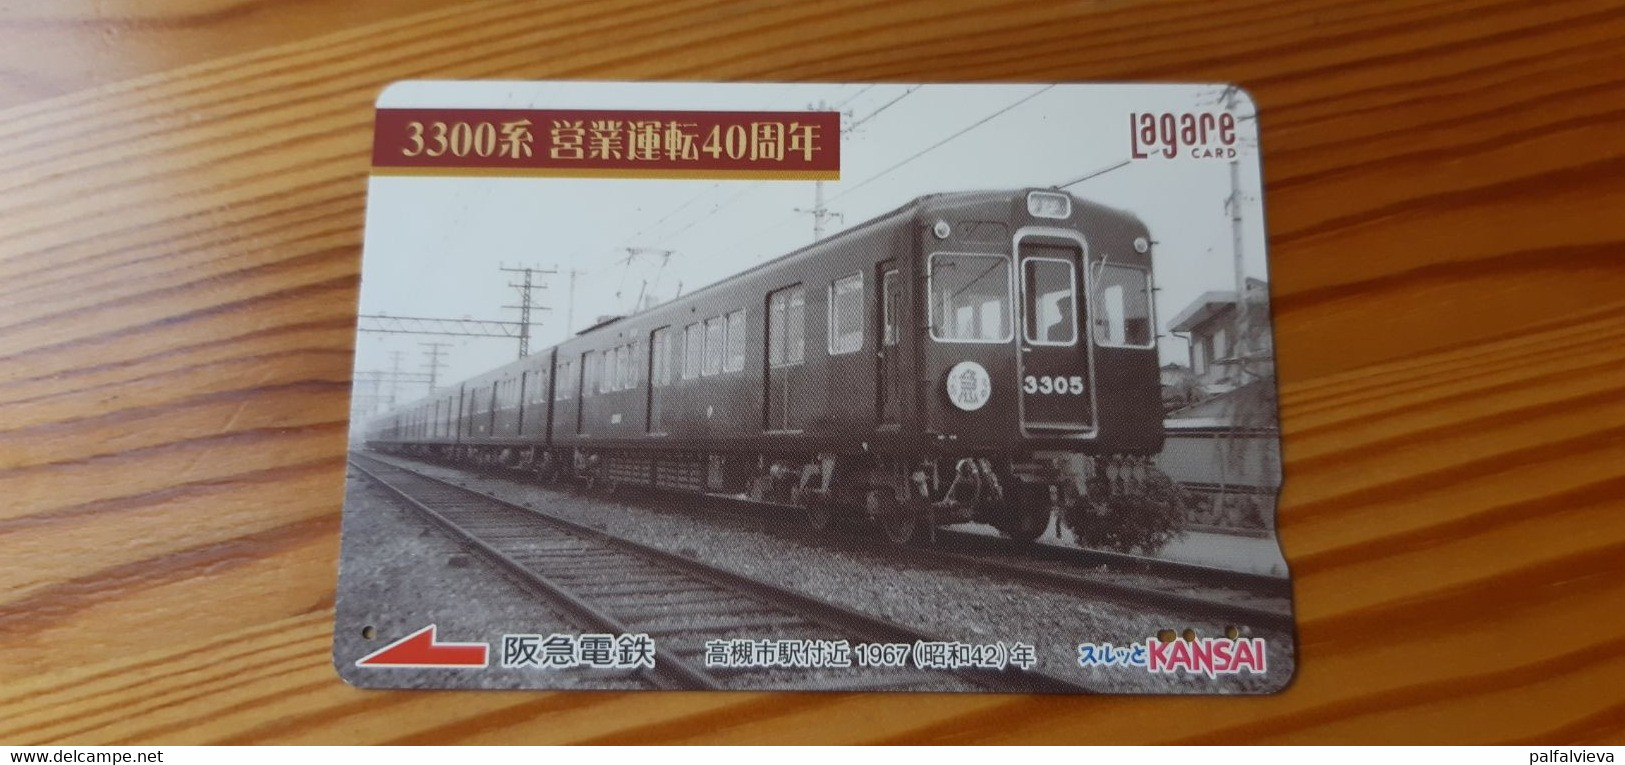 Prepaid Transport Card Japan - Train, Railway, Historic Photo - Japan